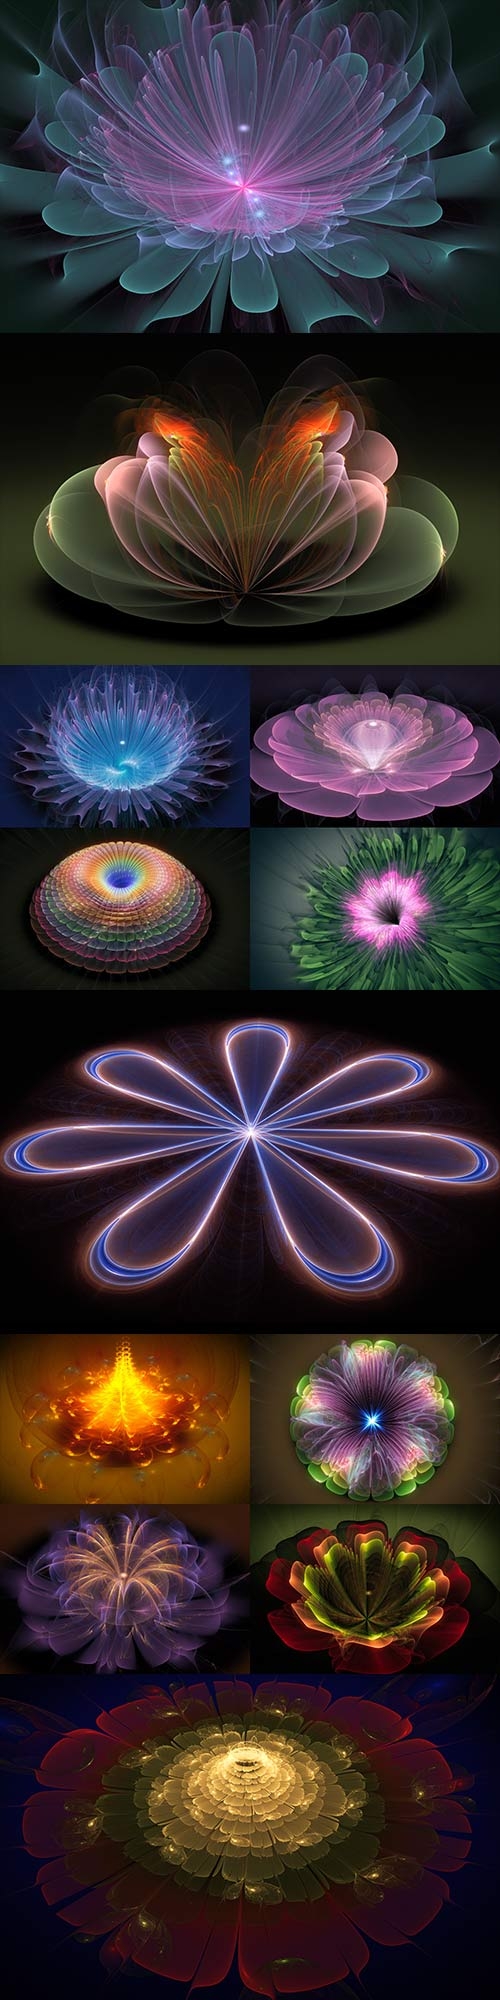 Stunning magic of fractal flowers